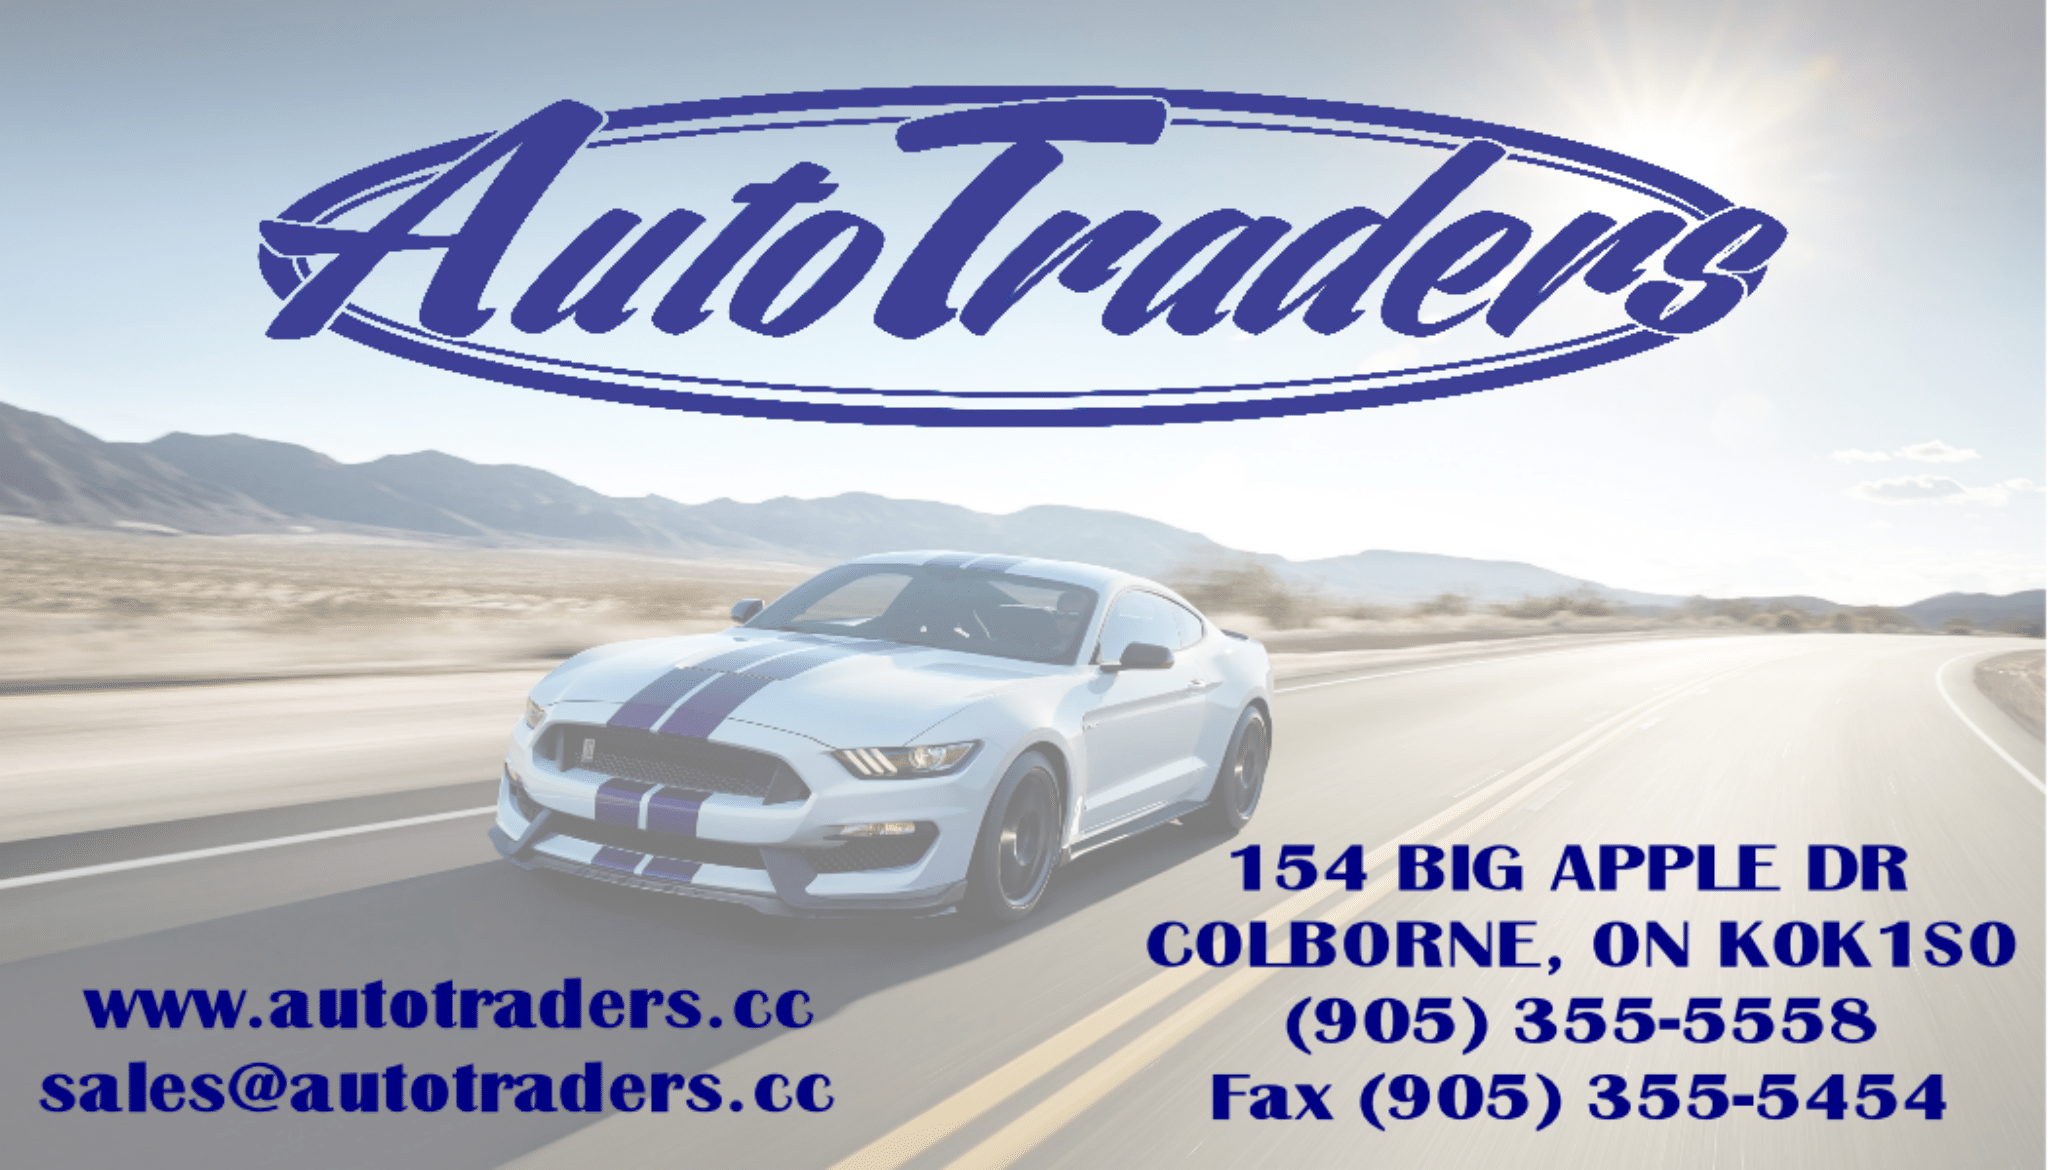 AUTOTRADERS (905) 355-5558